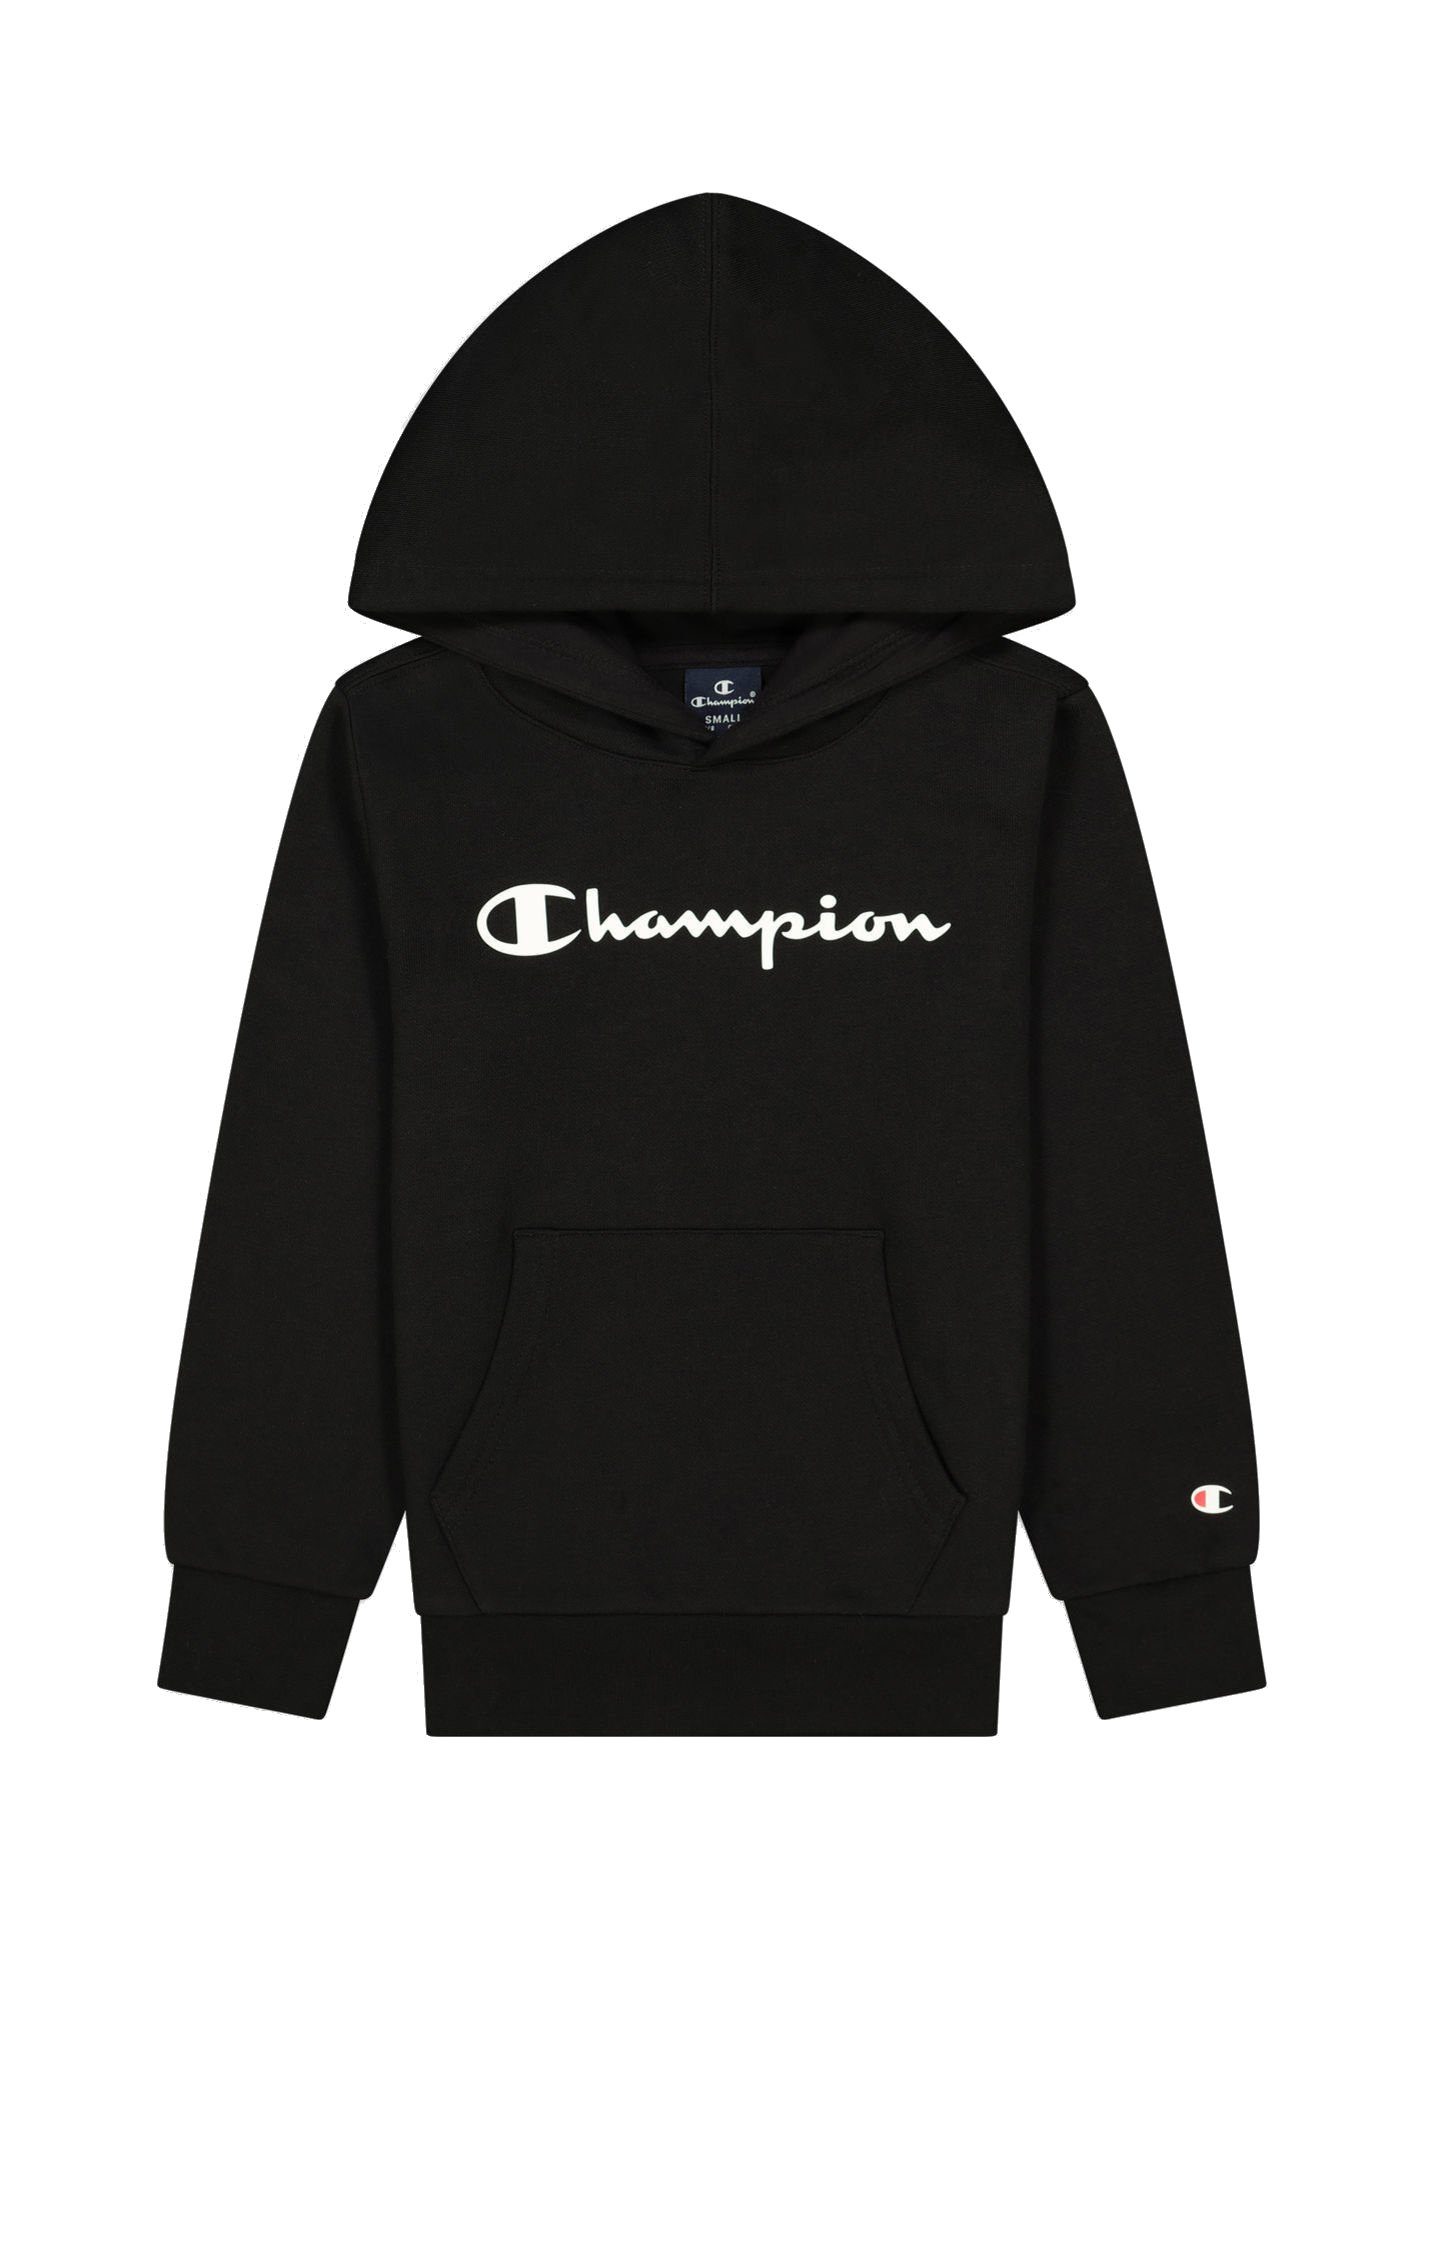 Champion Hoodie Champion Kinder (nbk) schwarz 305358 Kapuzenpullover Sweatshirt Hooded